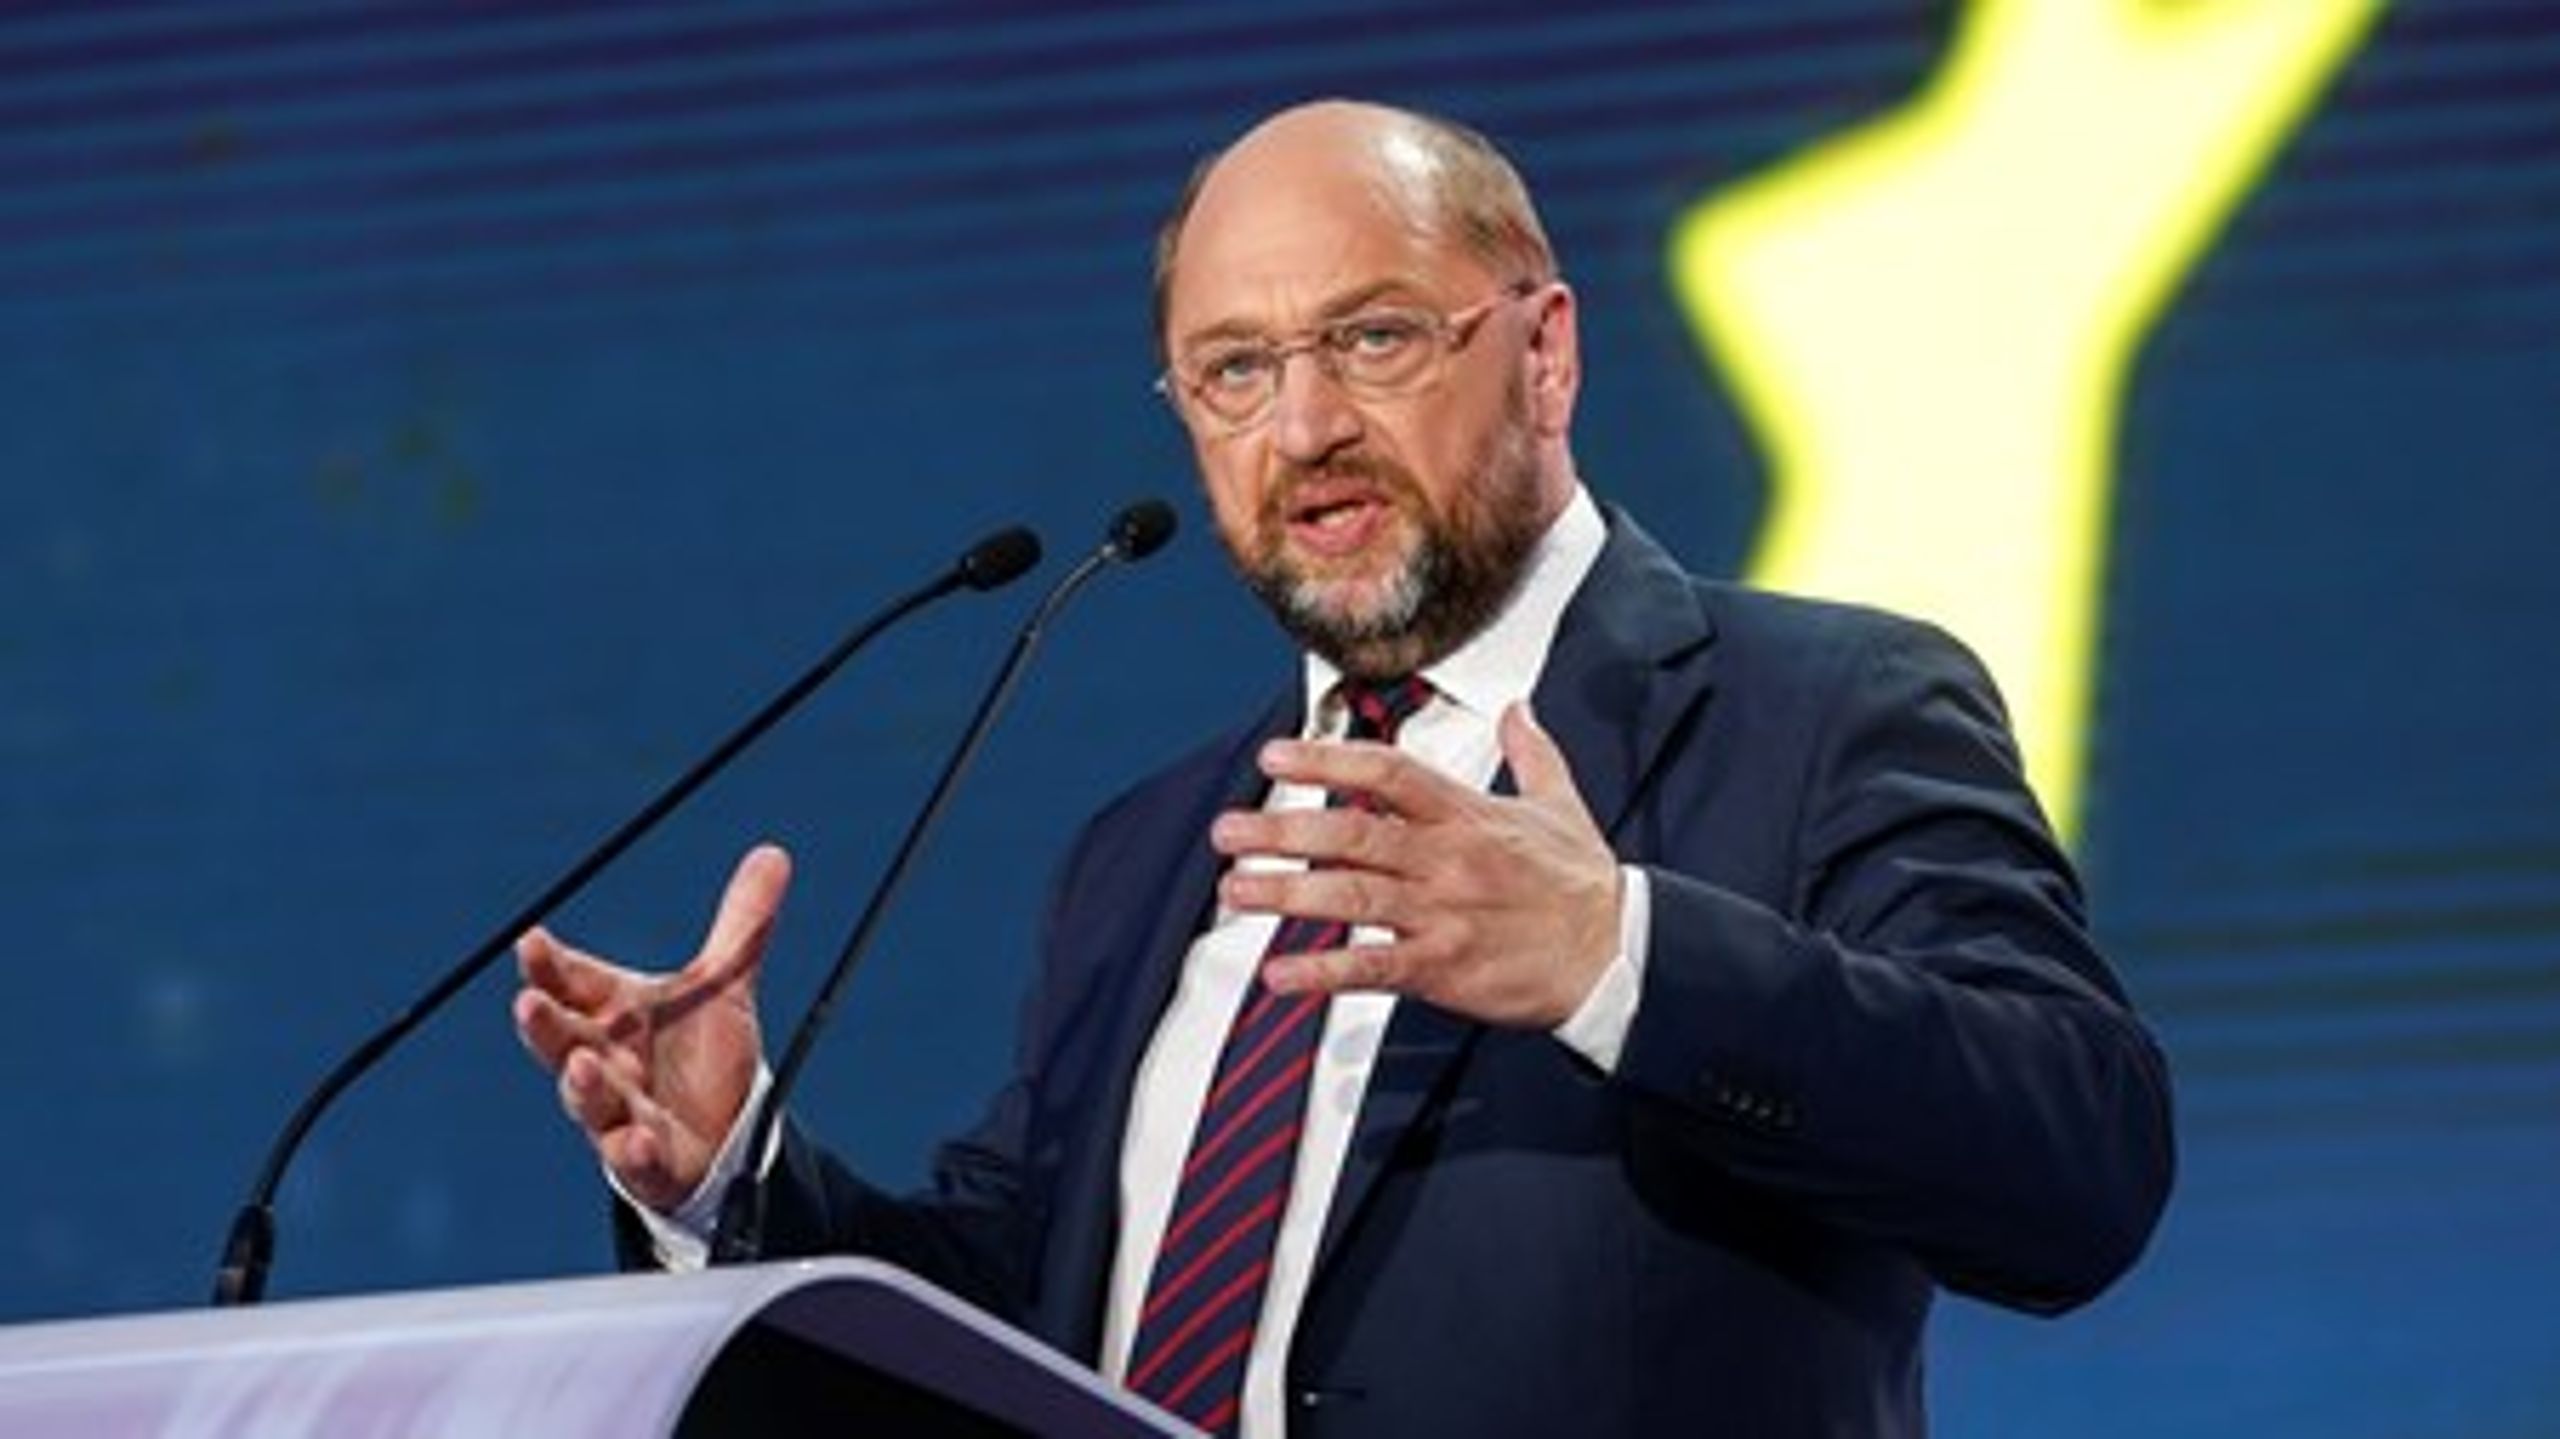 Den nuværende formand for Europa-Parlamentet, Martin Schulz, var i 2014 den socialdemokratiske gruppes Spitzenkandidat til posten som Kommissionsformand. Nu vil Europa-Parlamentet gøre ordningen med spidskandidater permanent.